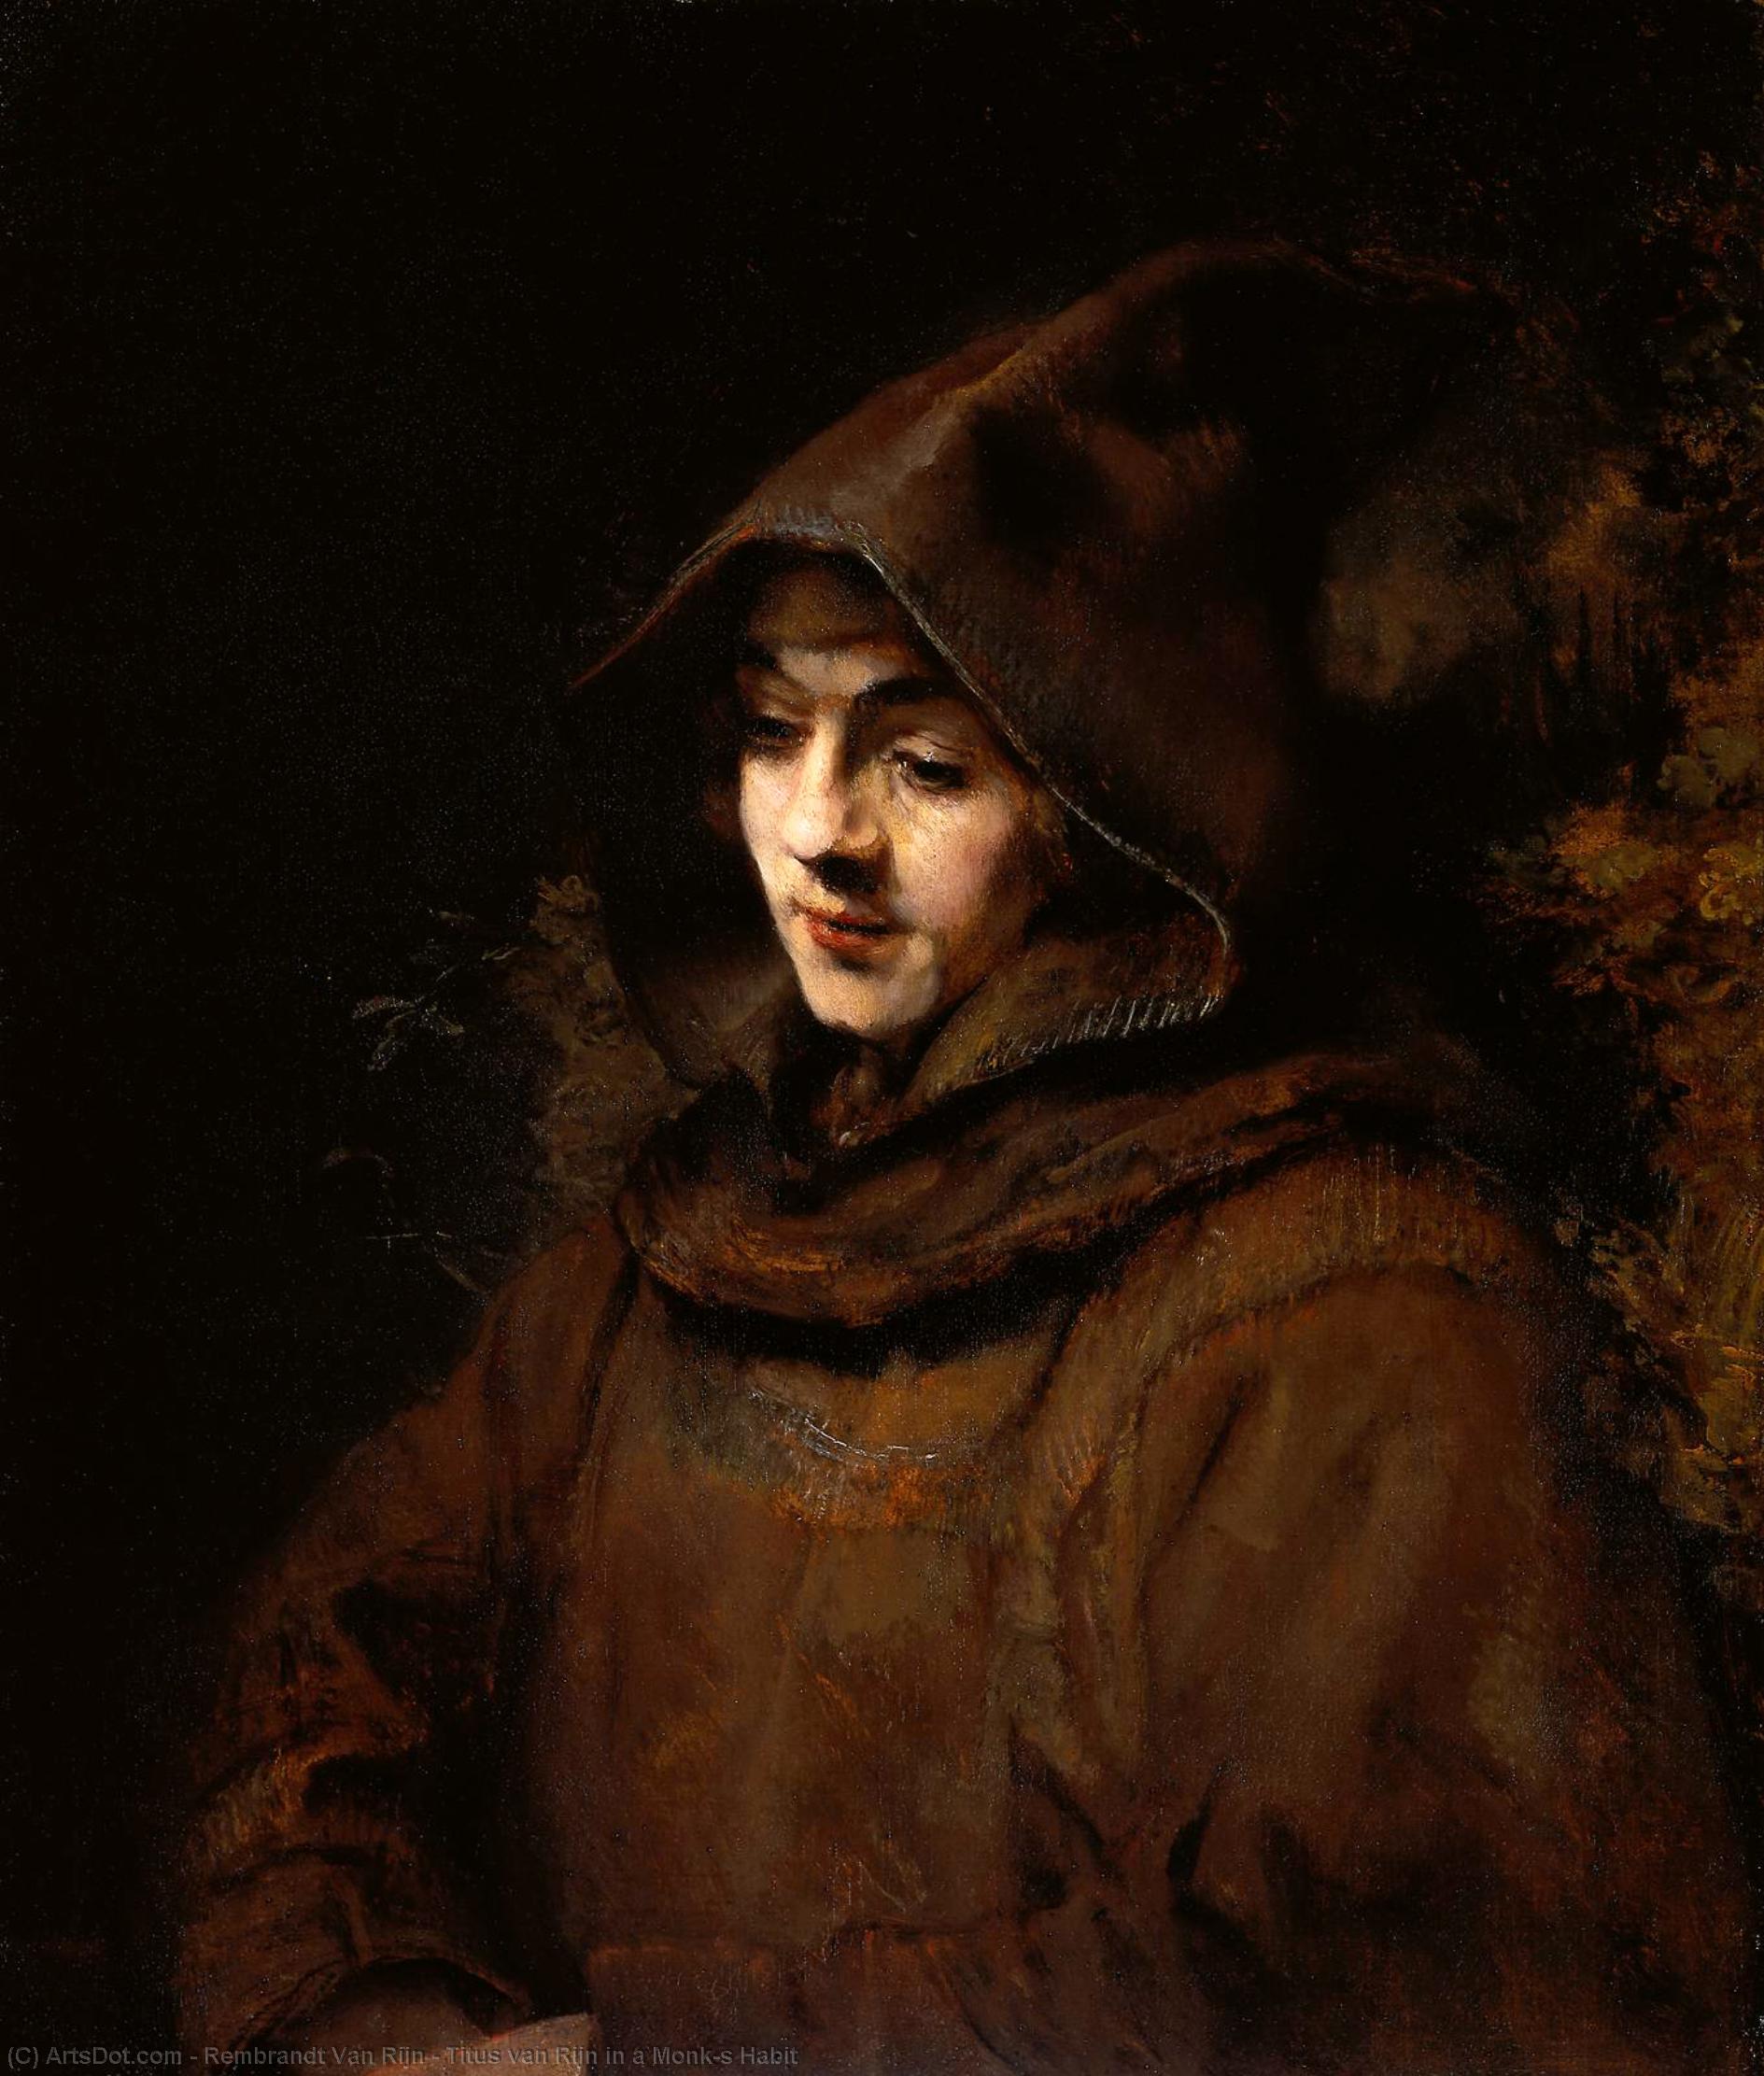 Wikioo.org - Encyklopedia Sztuk Pięknych - Malarstwo, Grafika Rembrandt Van Rijn - Titus van Rijn in a Monk's Habit